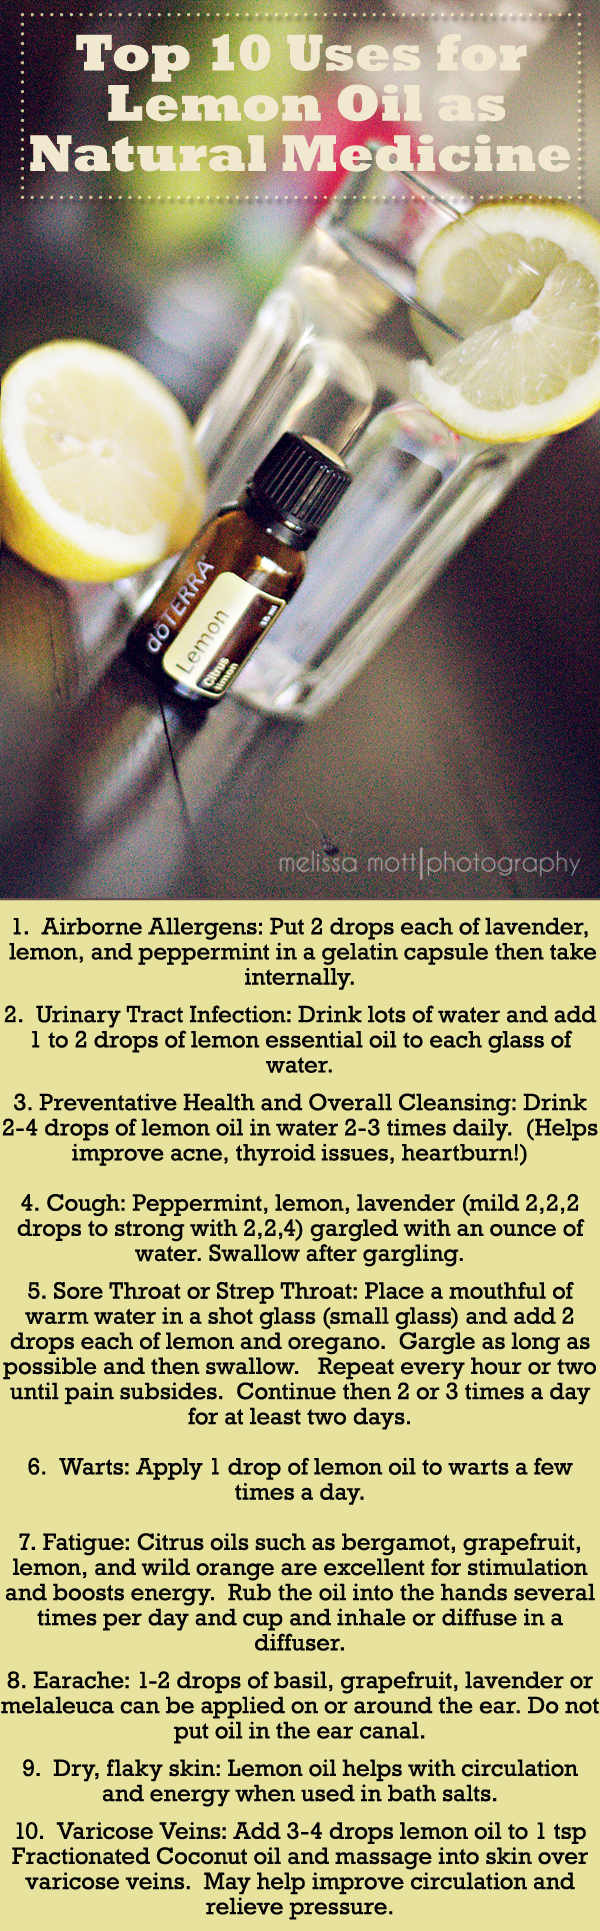 Lemon Oil uses as natural medicine